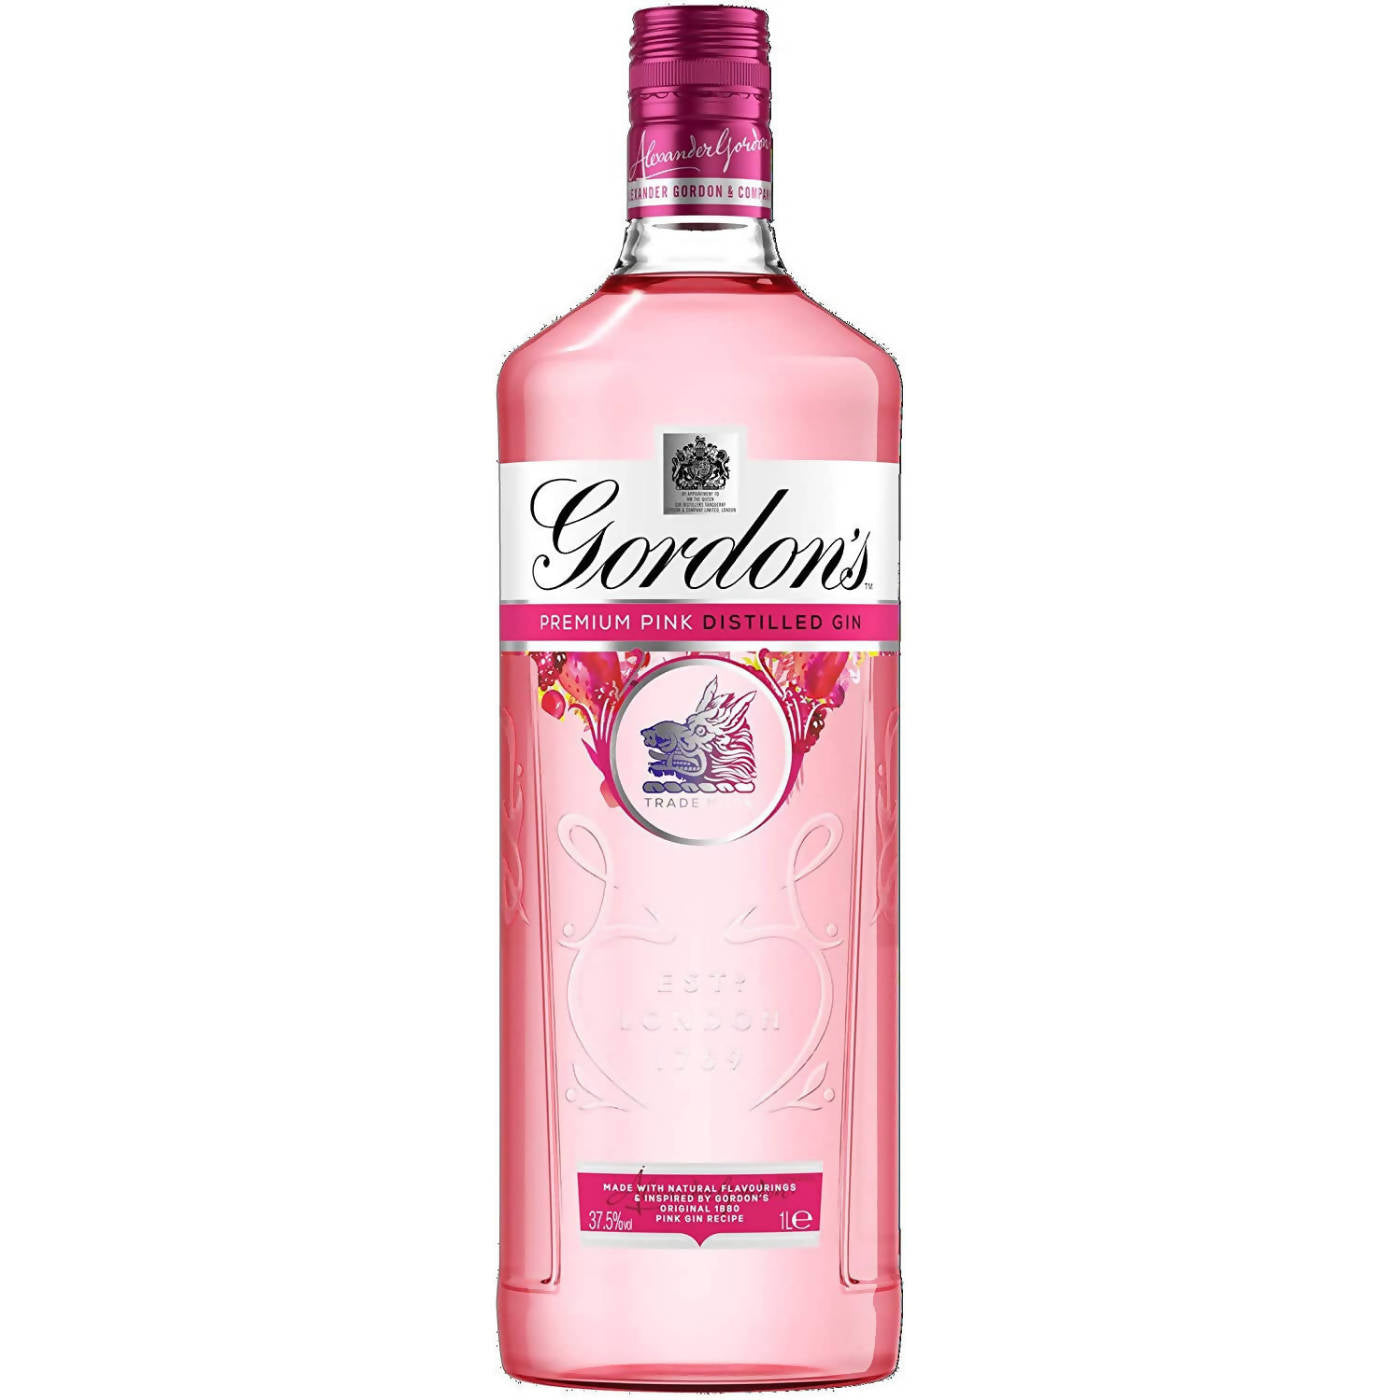 Gordon's Pink Gin, 1L 37.5% ABV - McGrocer